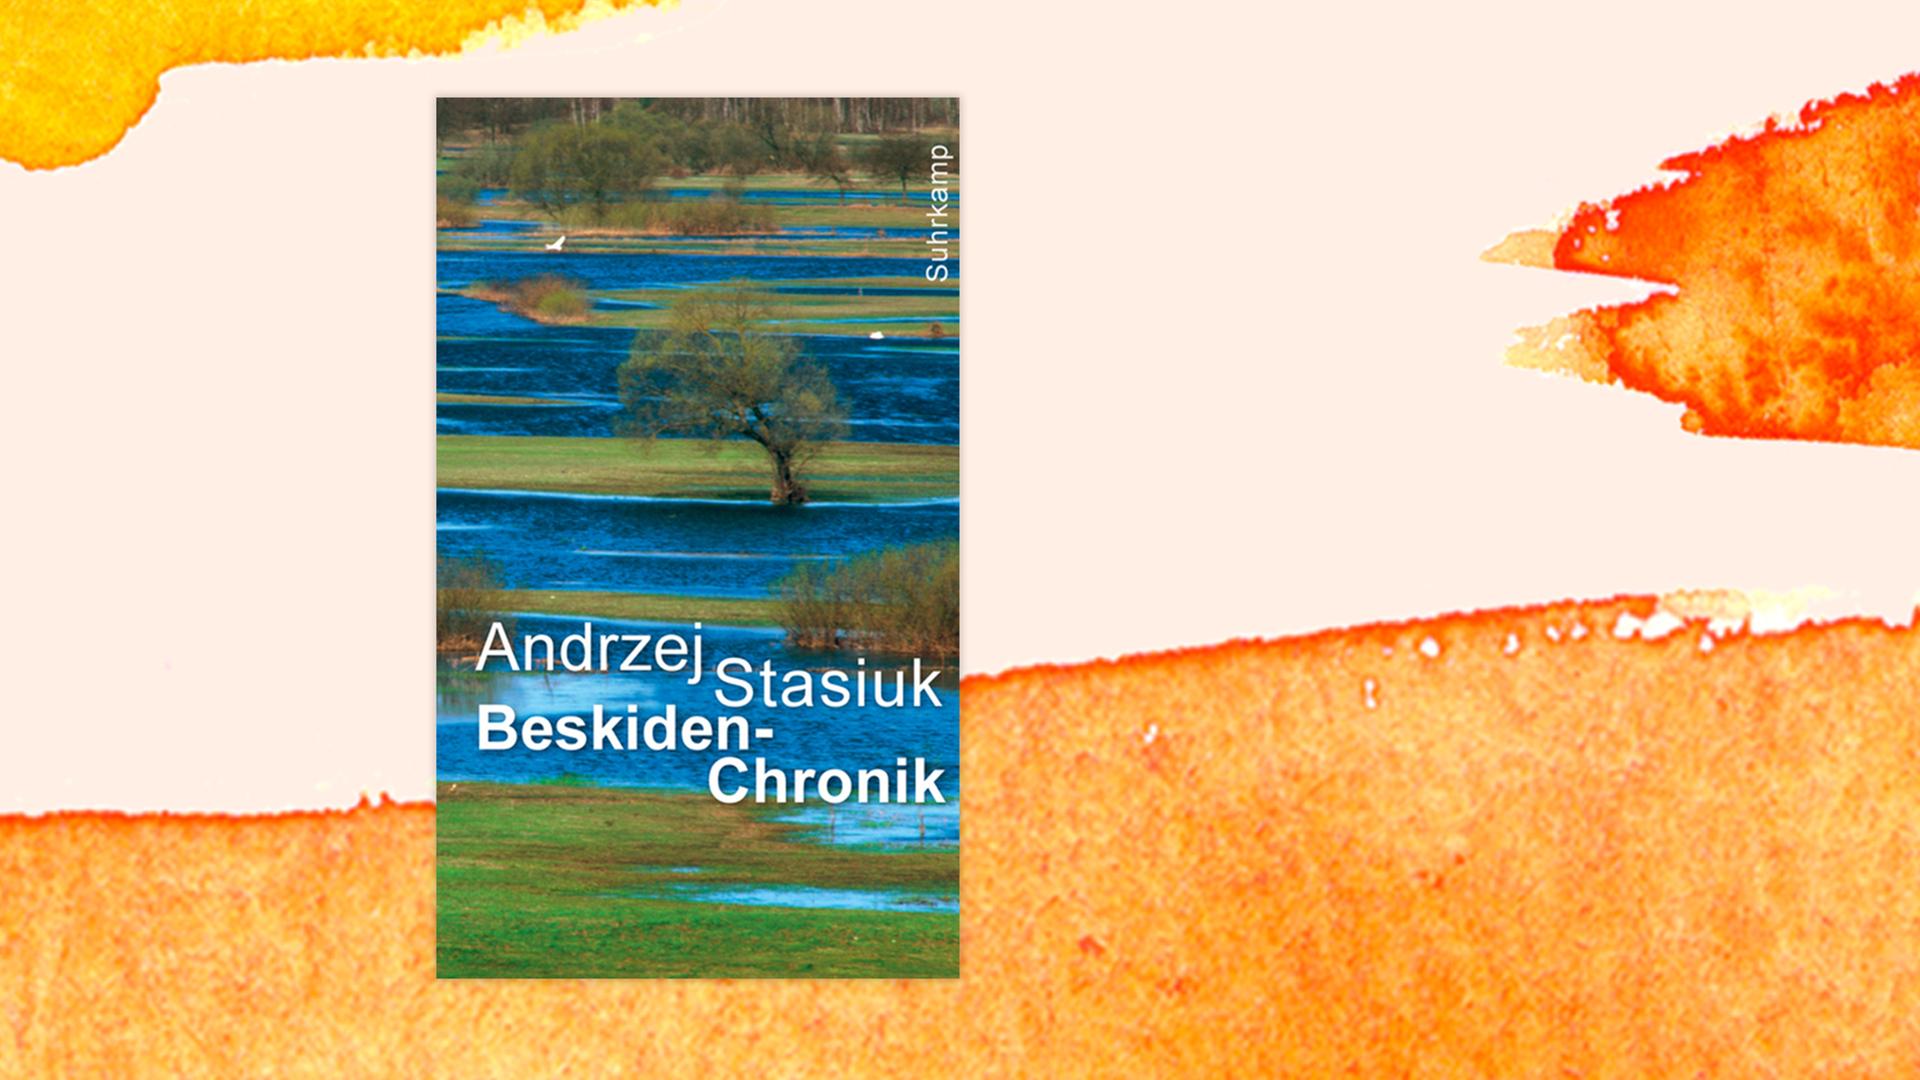 Buchcover zu Andrzej Stasiuks "Beskiden-Chronik".